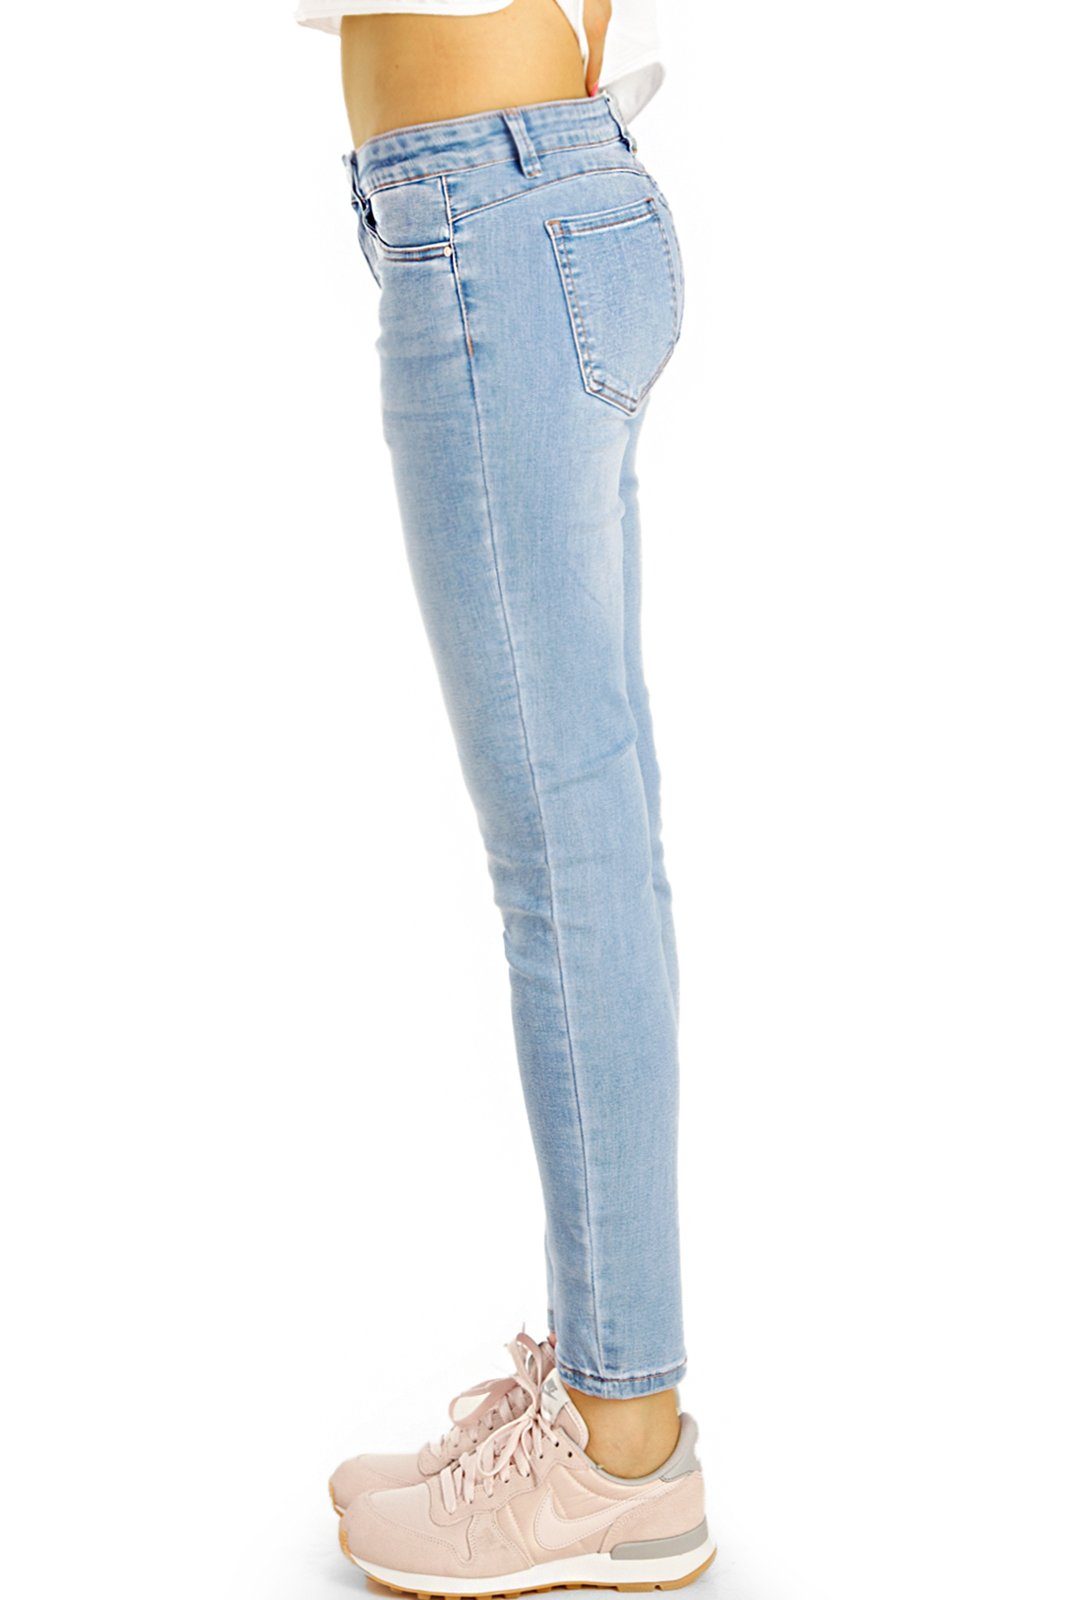 Stretch-Anteil, mit Hose Skinny Low-rise-Jeans Stretch - Damen- j27p-1 dunkelblau Hüftjeans styled Röhrenjeans slim - be 5-Pocket-Style